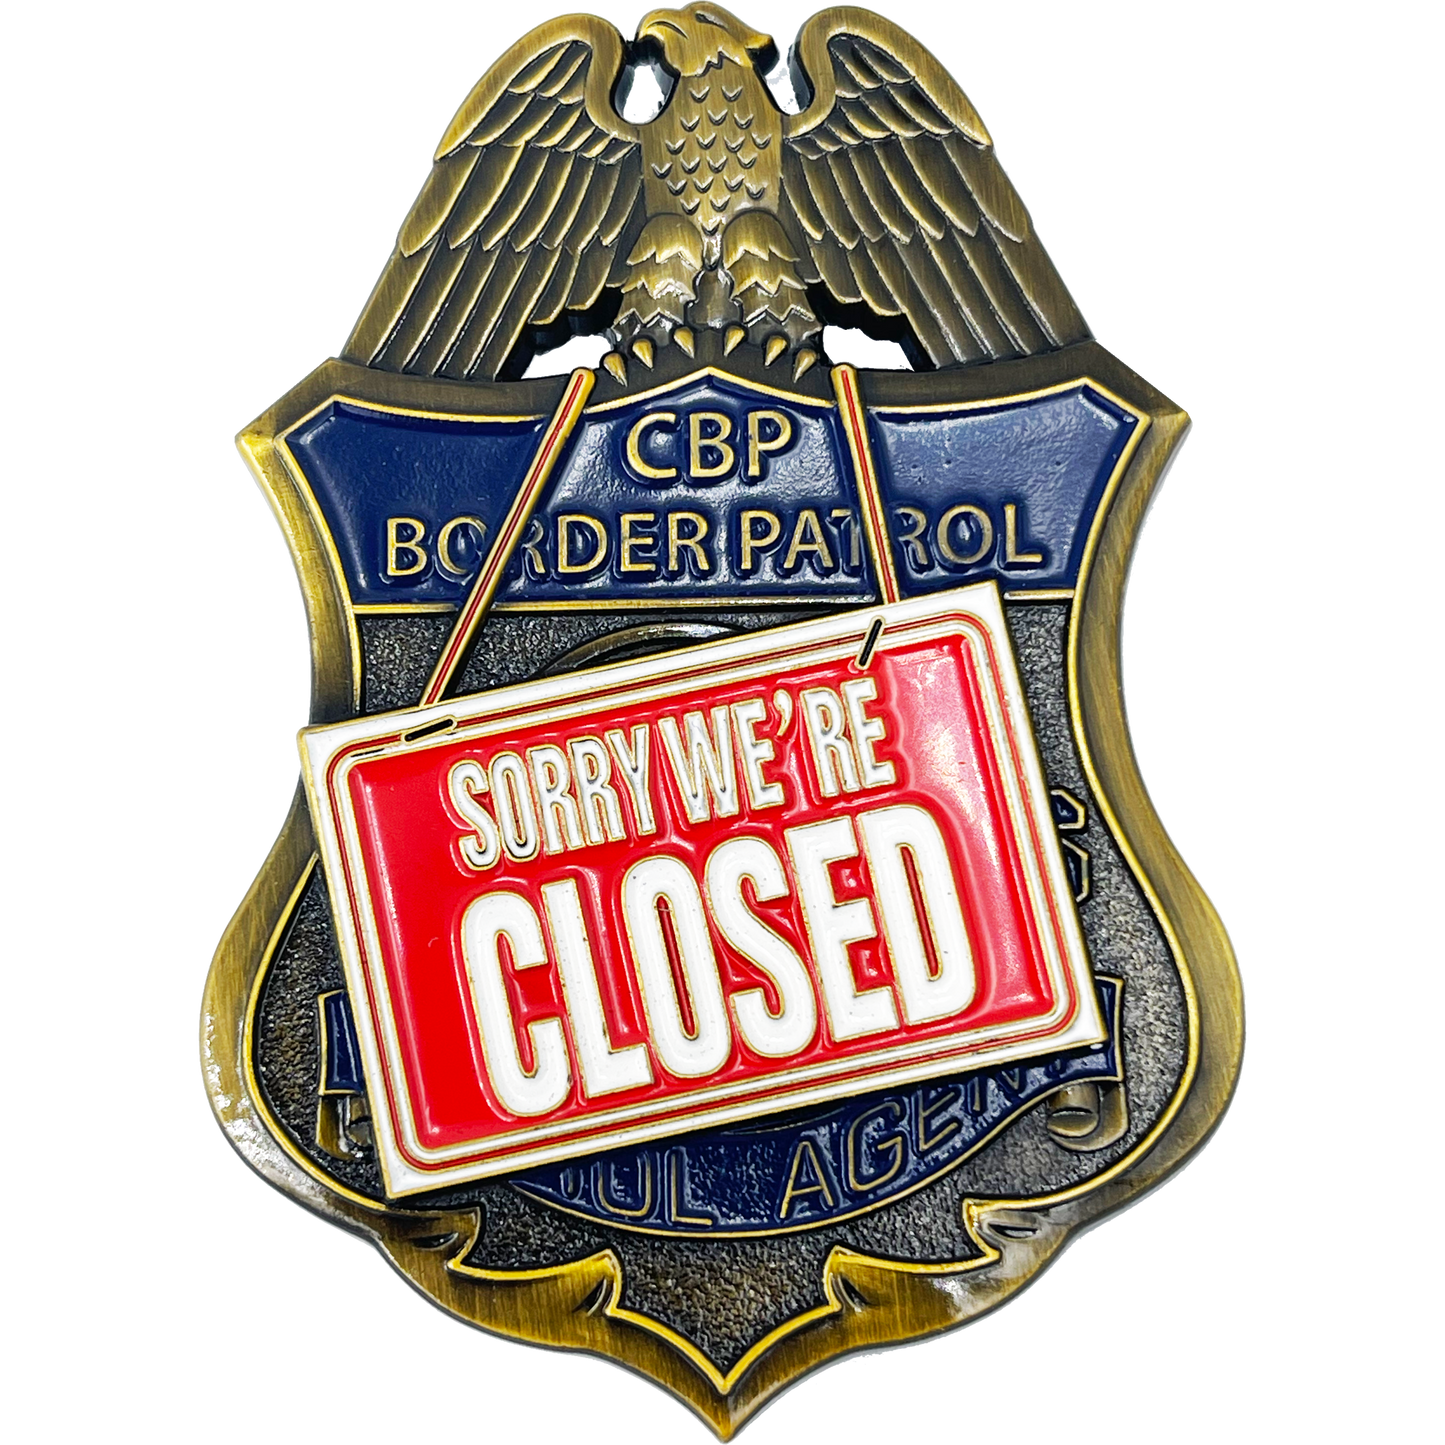 BL11-014 CBP Border Patrol Agent Sorry We're Closed full size pin BPA